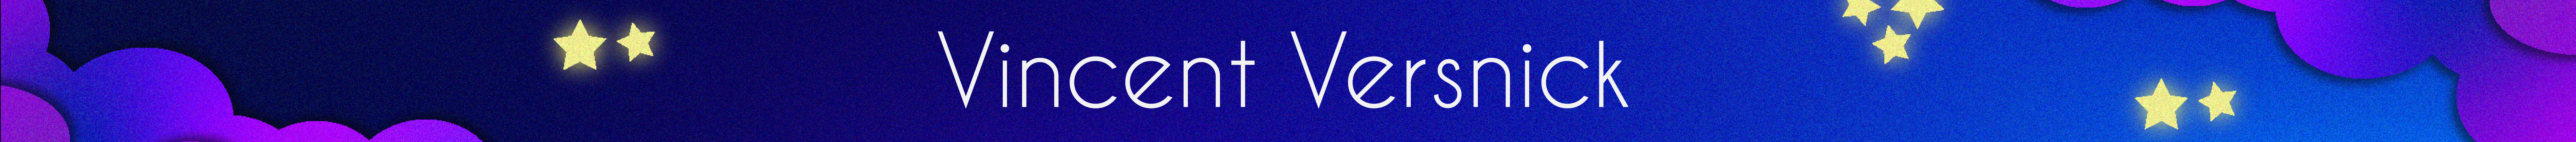 Vincent Versnick's profile banner